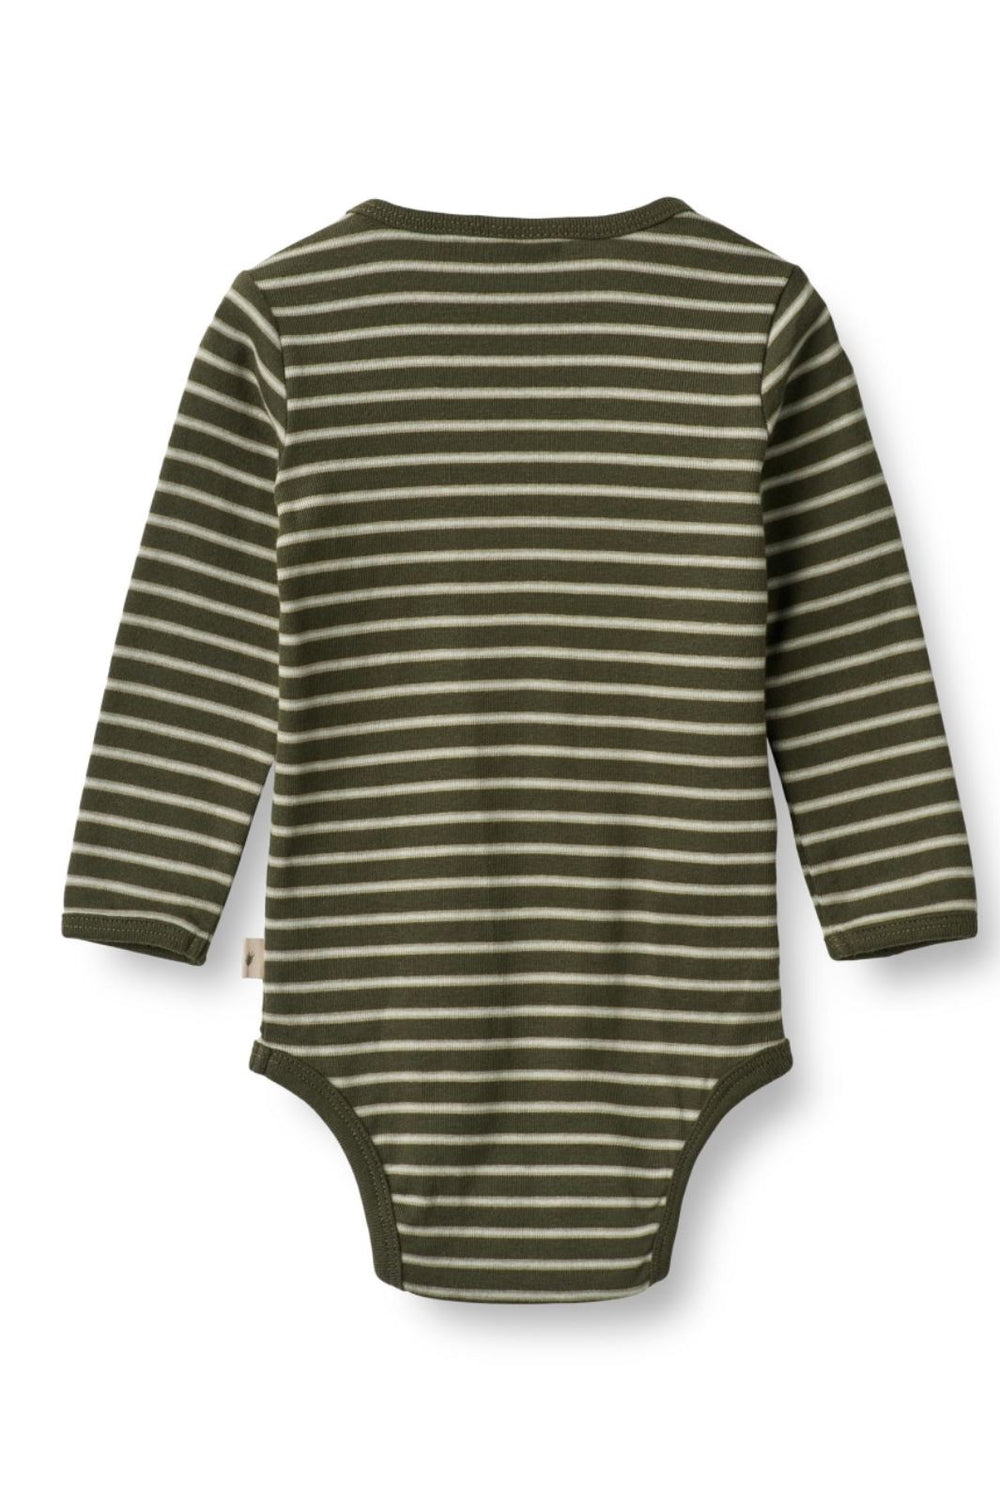 Wheat - Body Berti - 4076 dark green stripe Bodysuits 